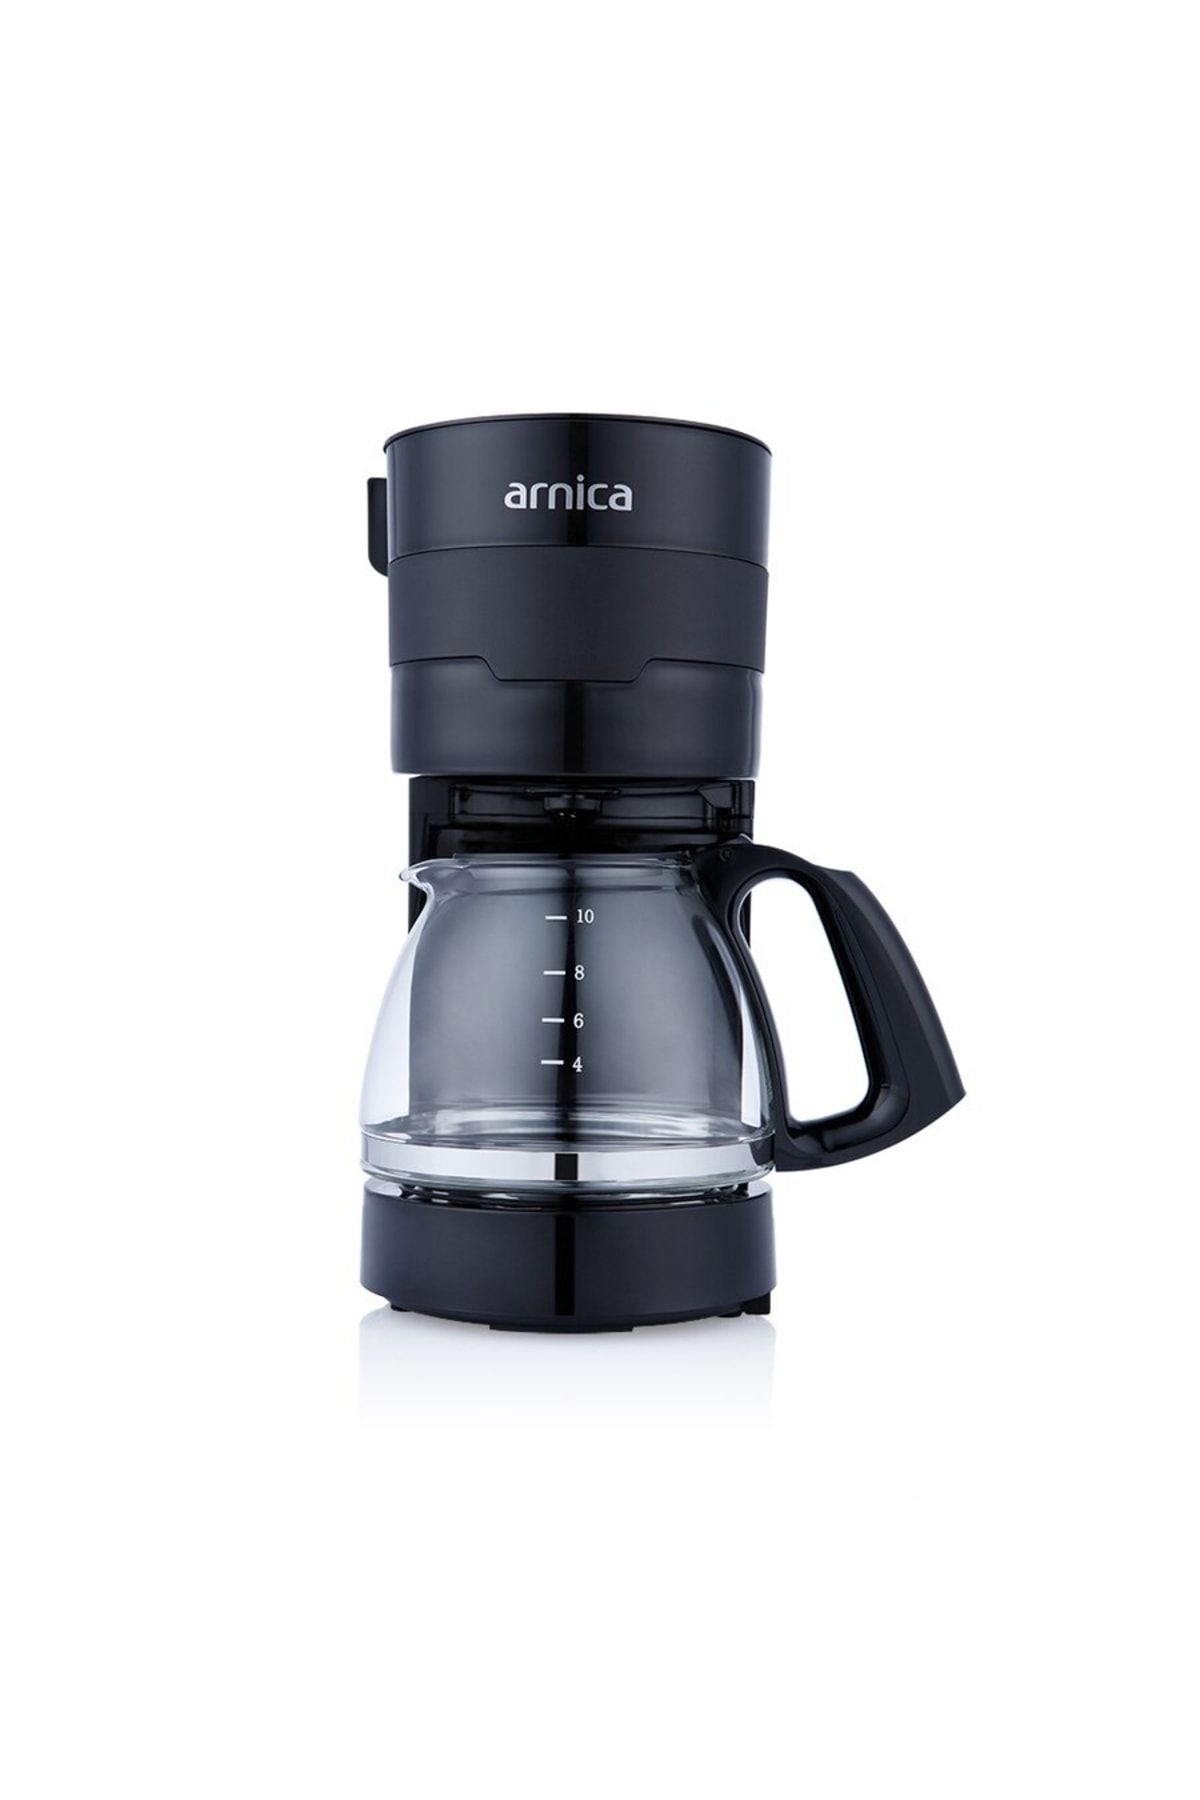 Arnica IH32130 Aroma Filtre Kahve Makinesi Siyah